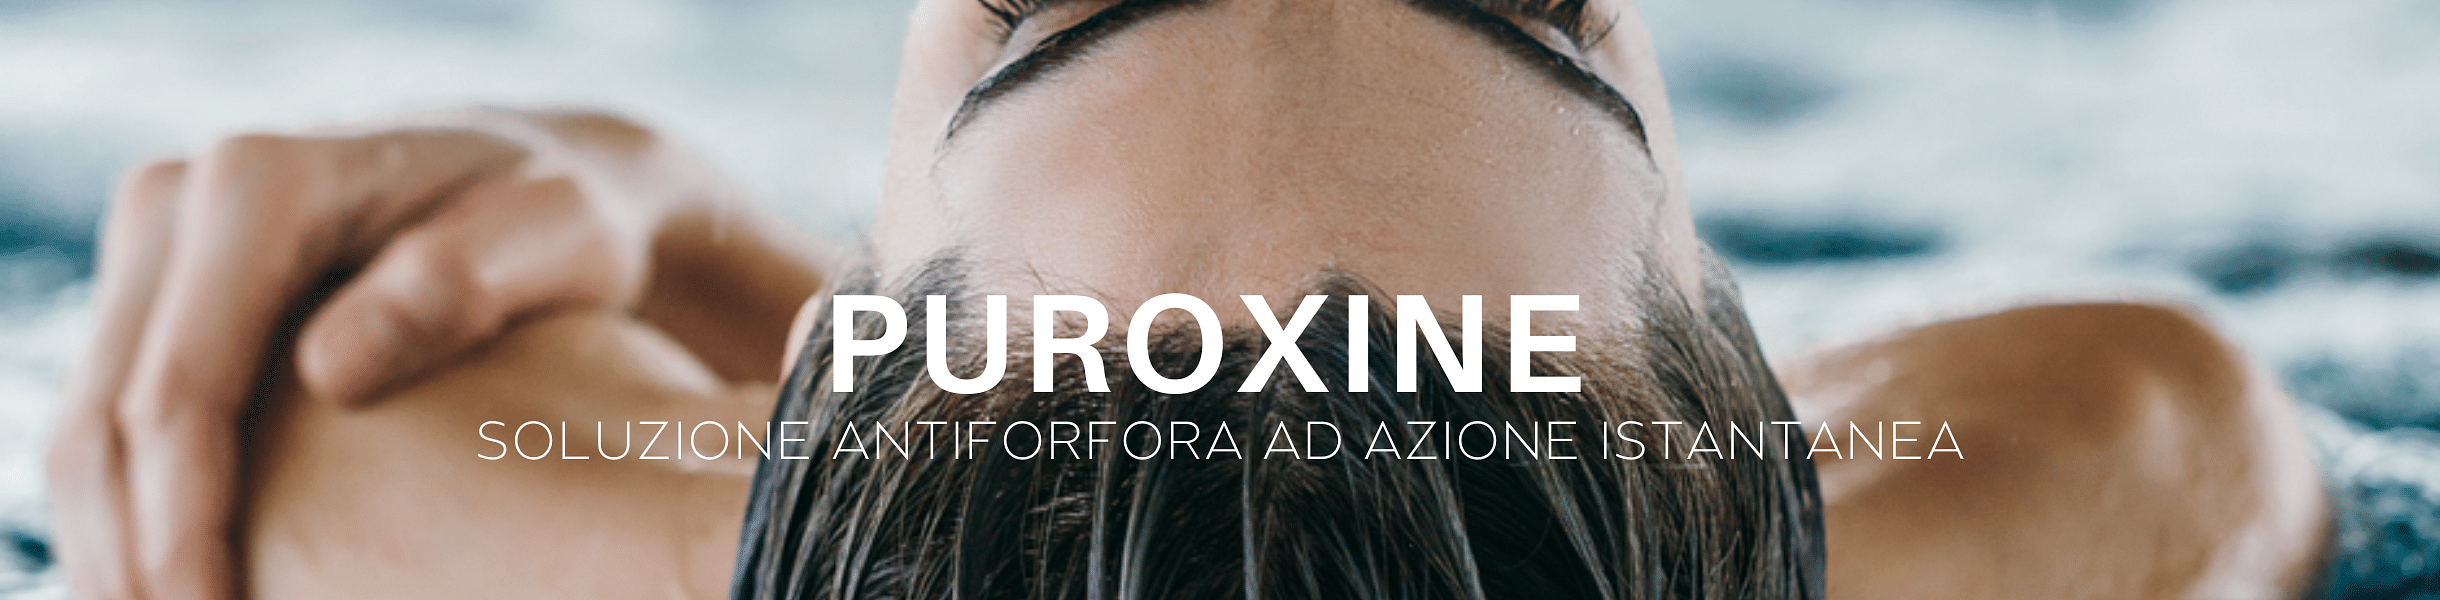 PUROXINE - ANTIFORFORA